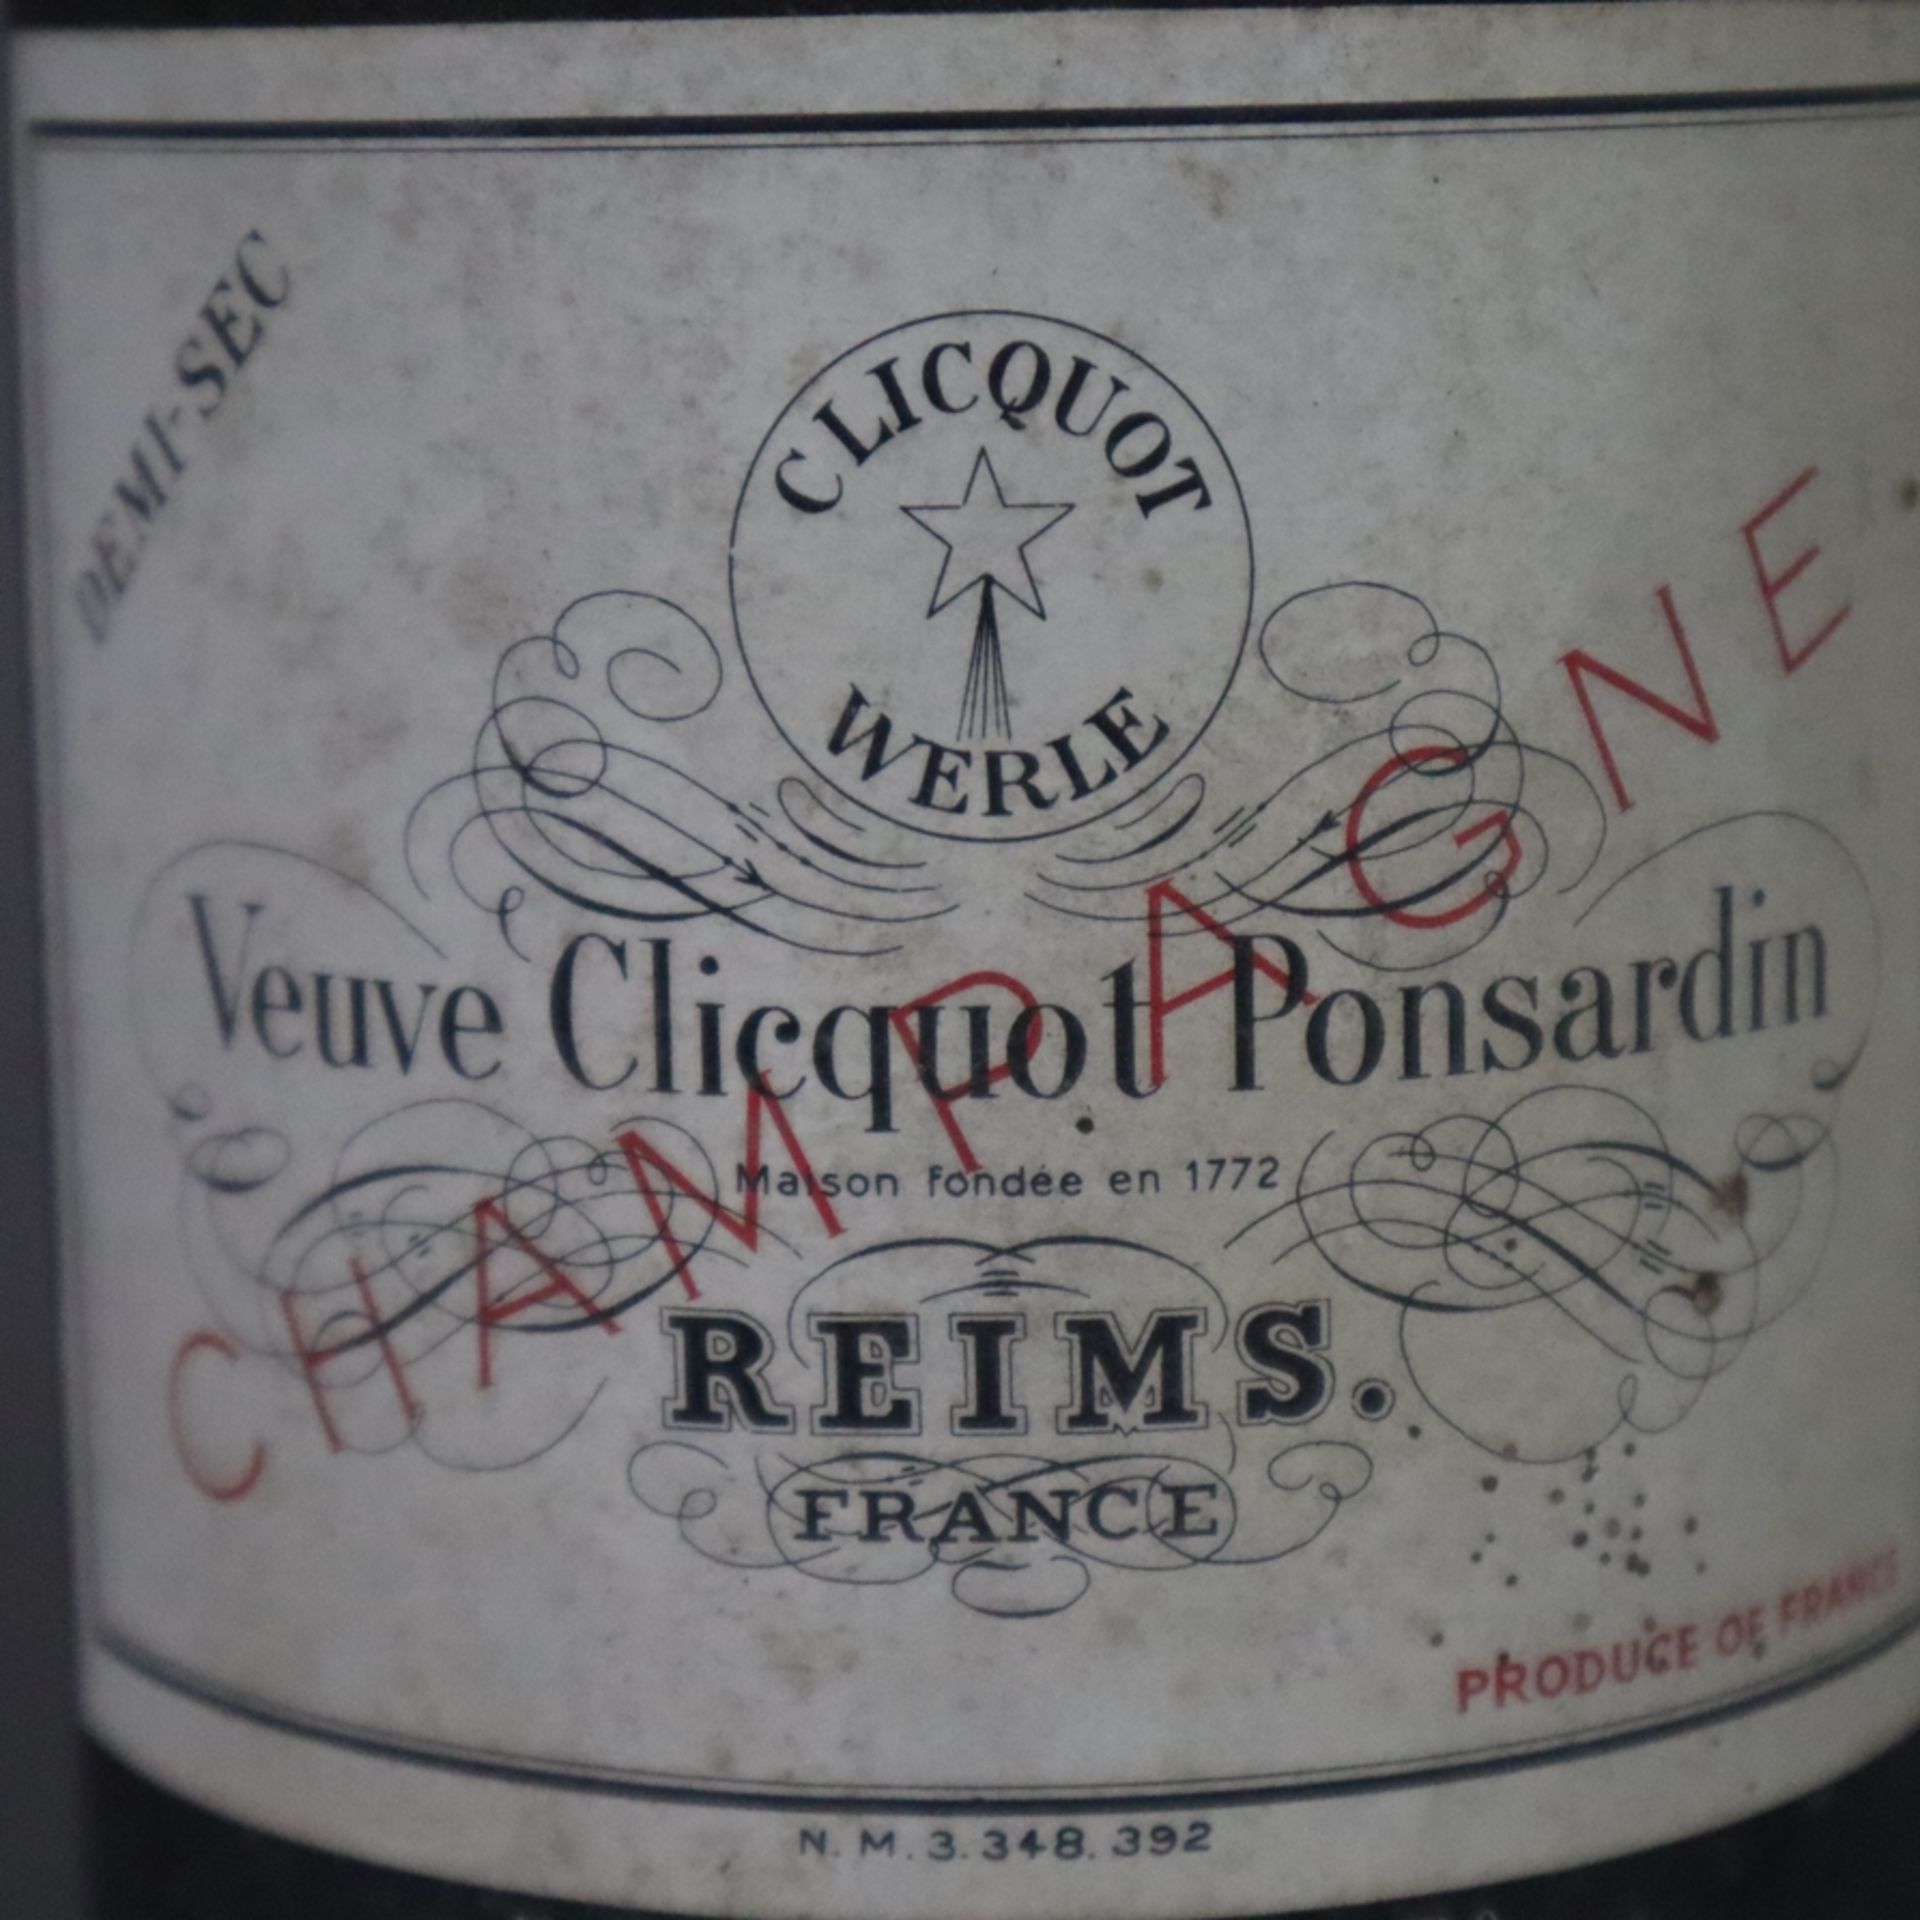 Champagner - Veuve Clicquot Ponsardin Bicentenaire 1772-1972 Brut, Reims, France, 750ml, Flasche ve - Bild 5 aus 5